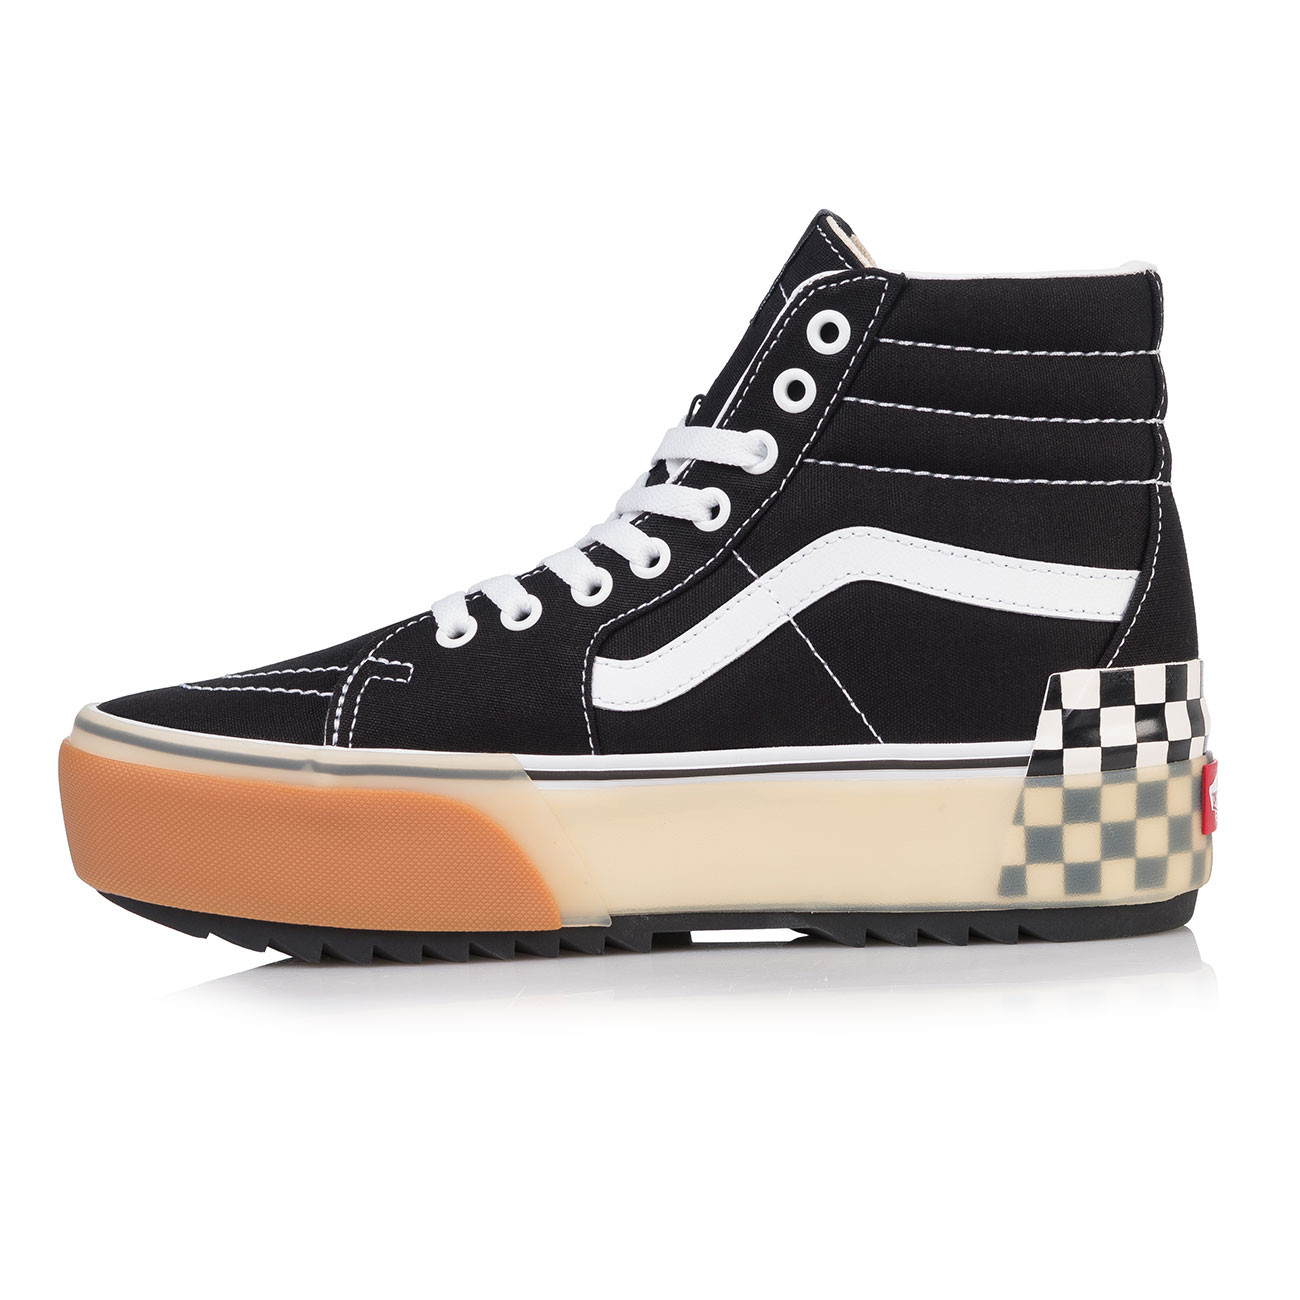 Skate shoes Vans Sk8-Hi Stacked black checkerboard | Snowboard Zezula